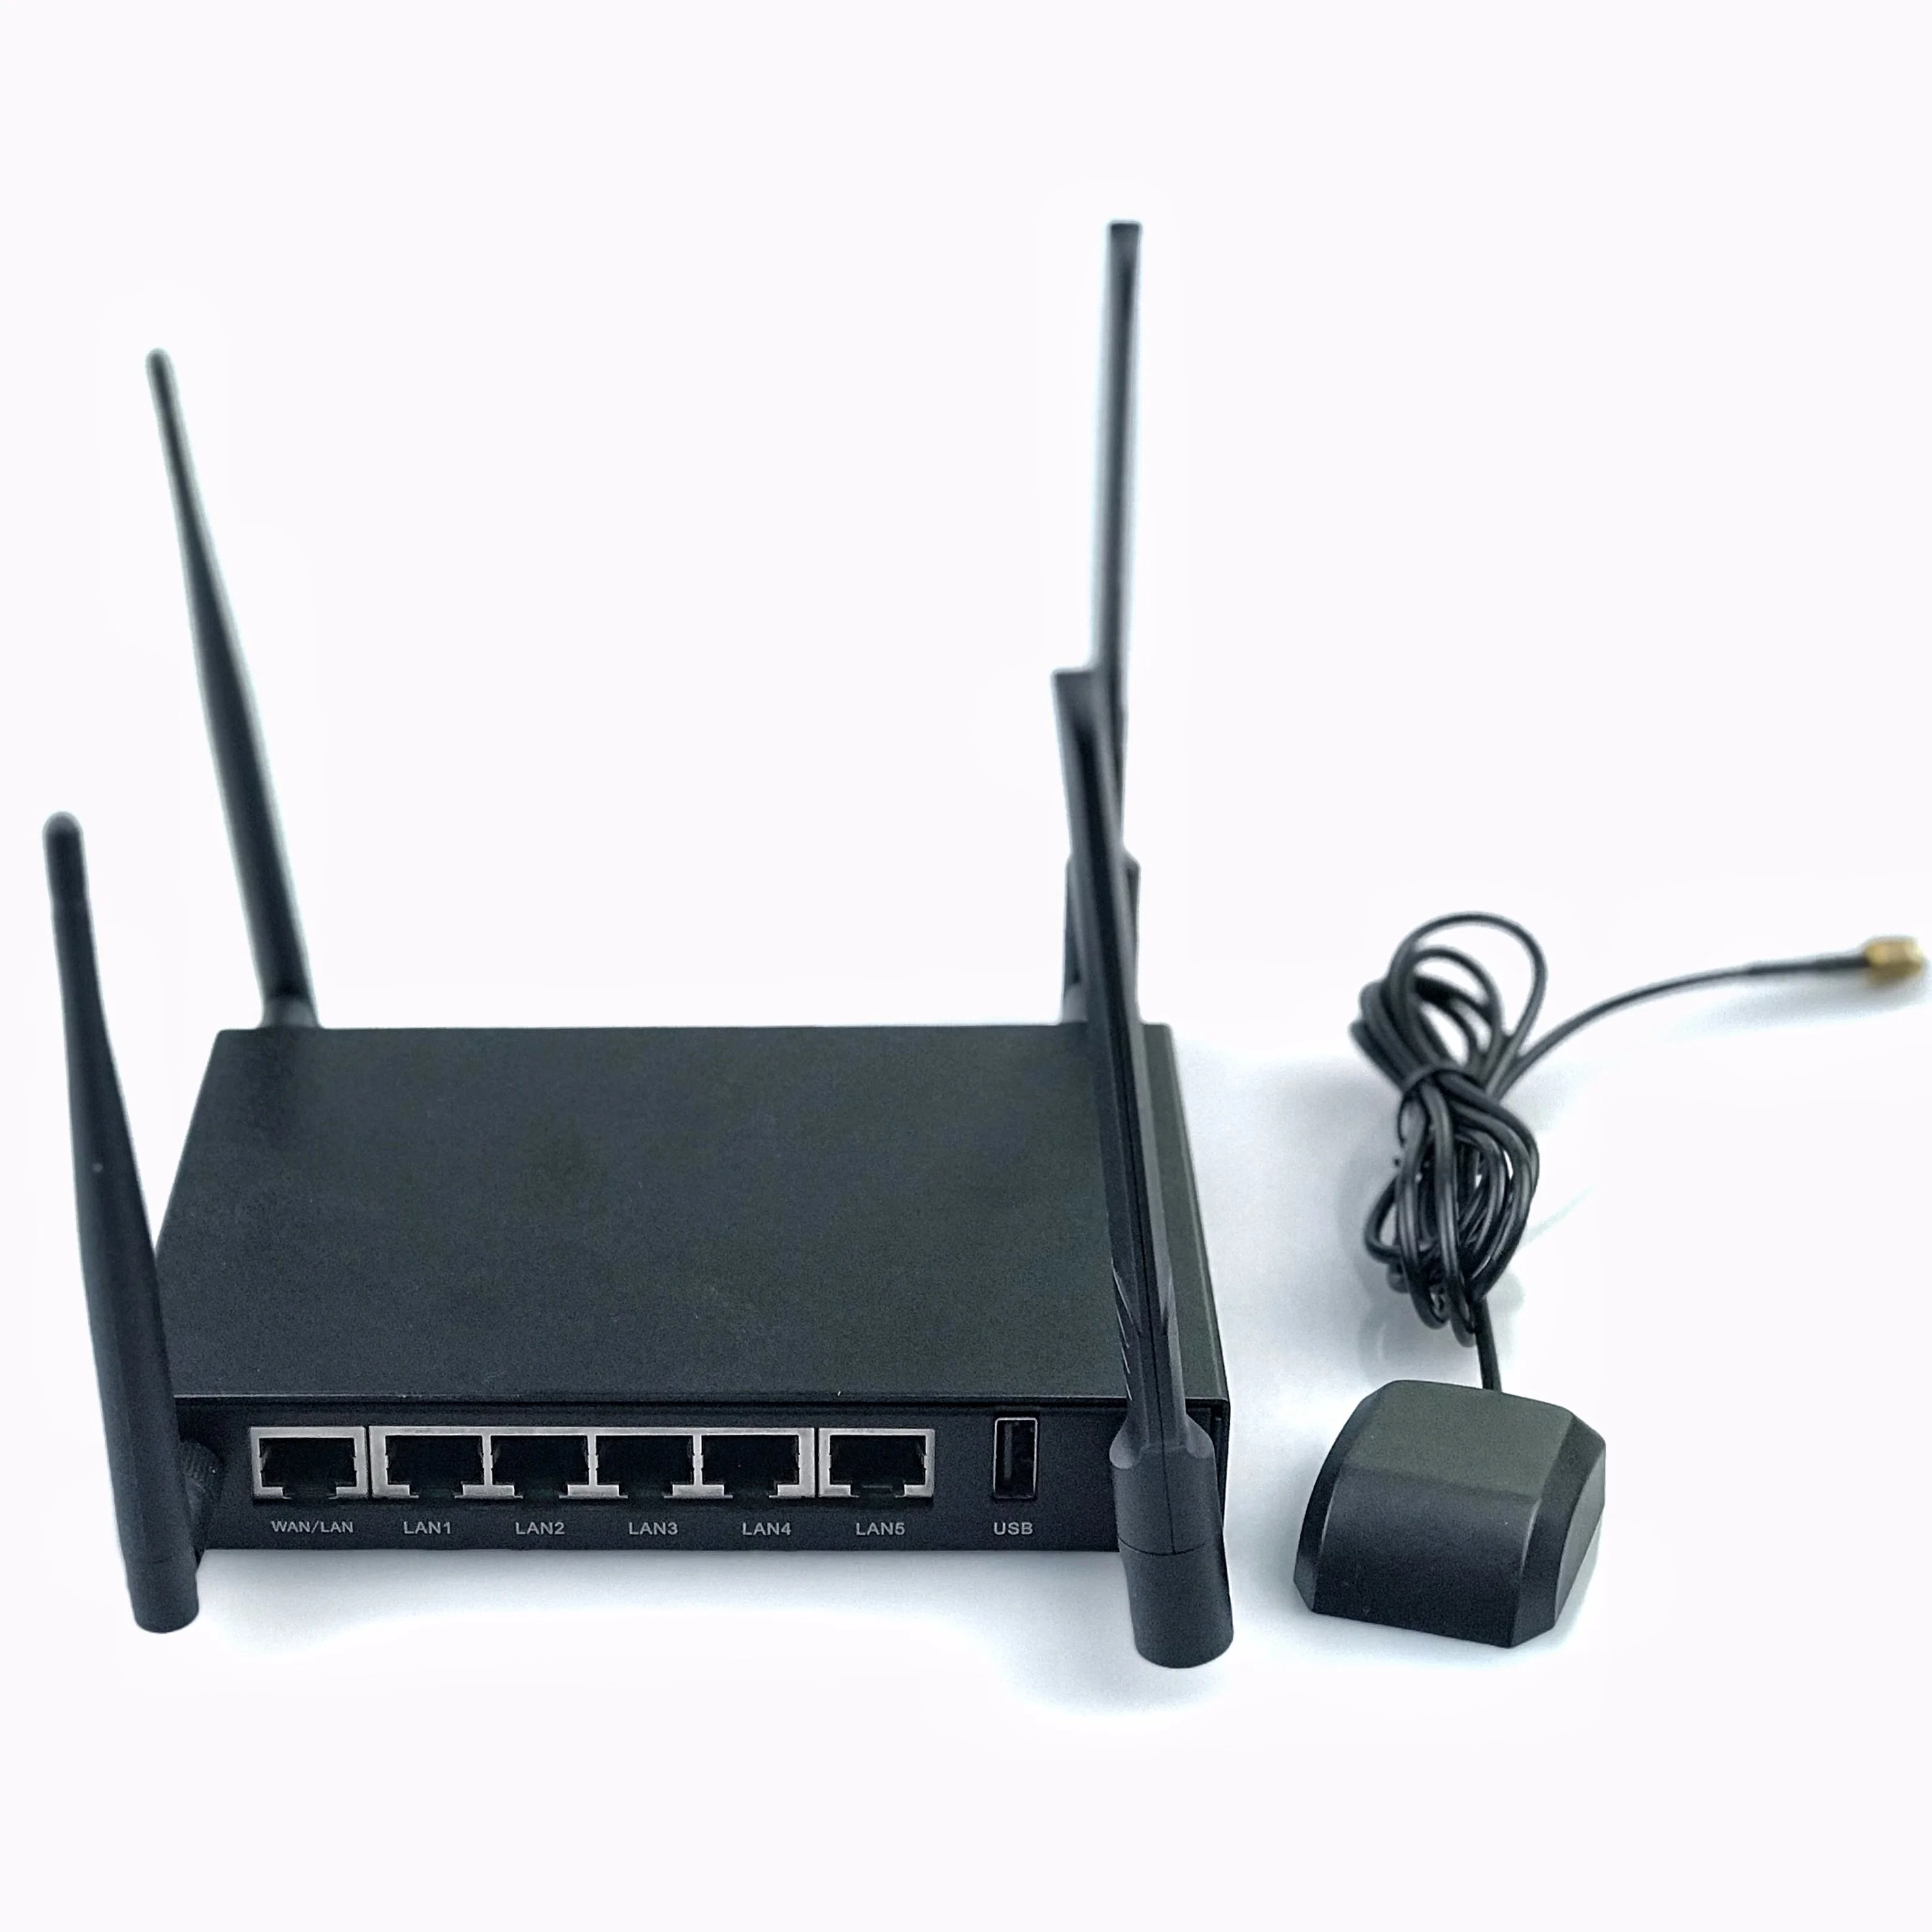 Nuevo M2m celular Industrial Router Wireless Router celular 4G con doble tarjeta SIM